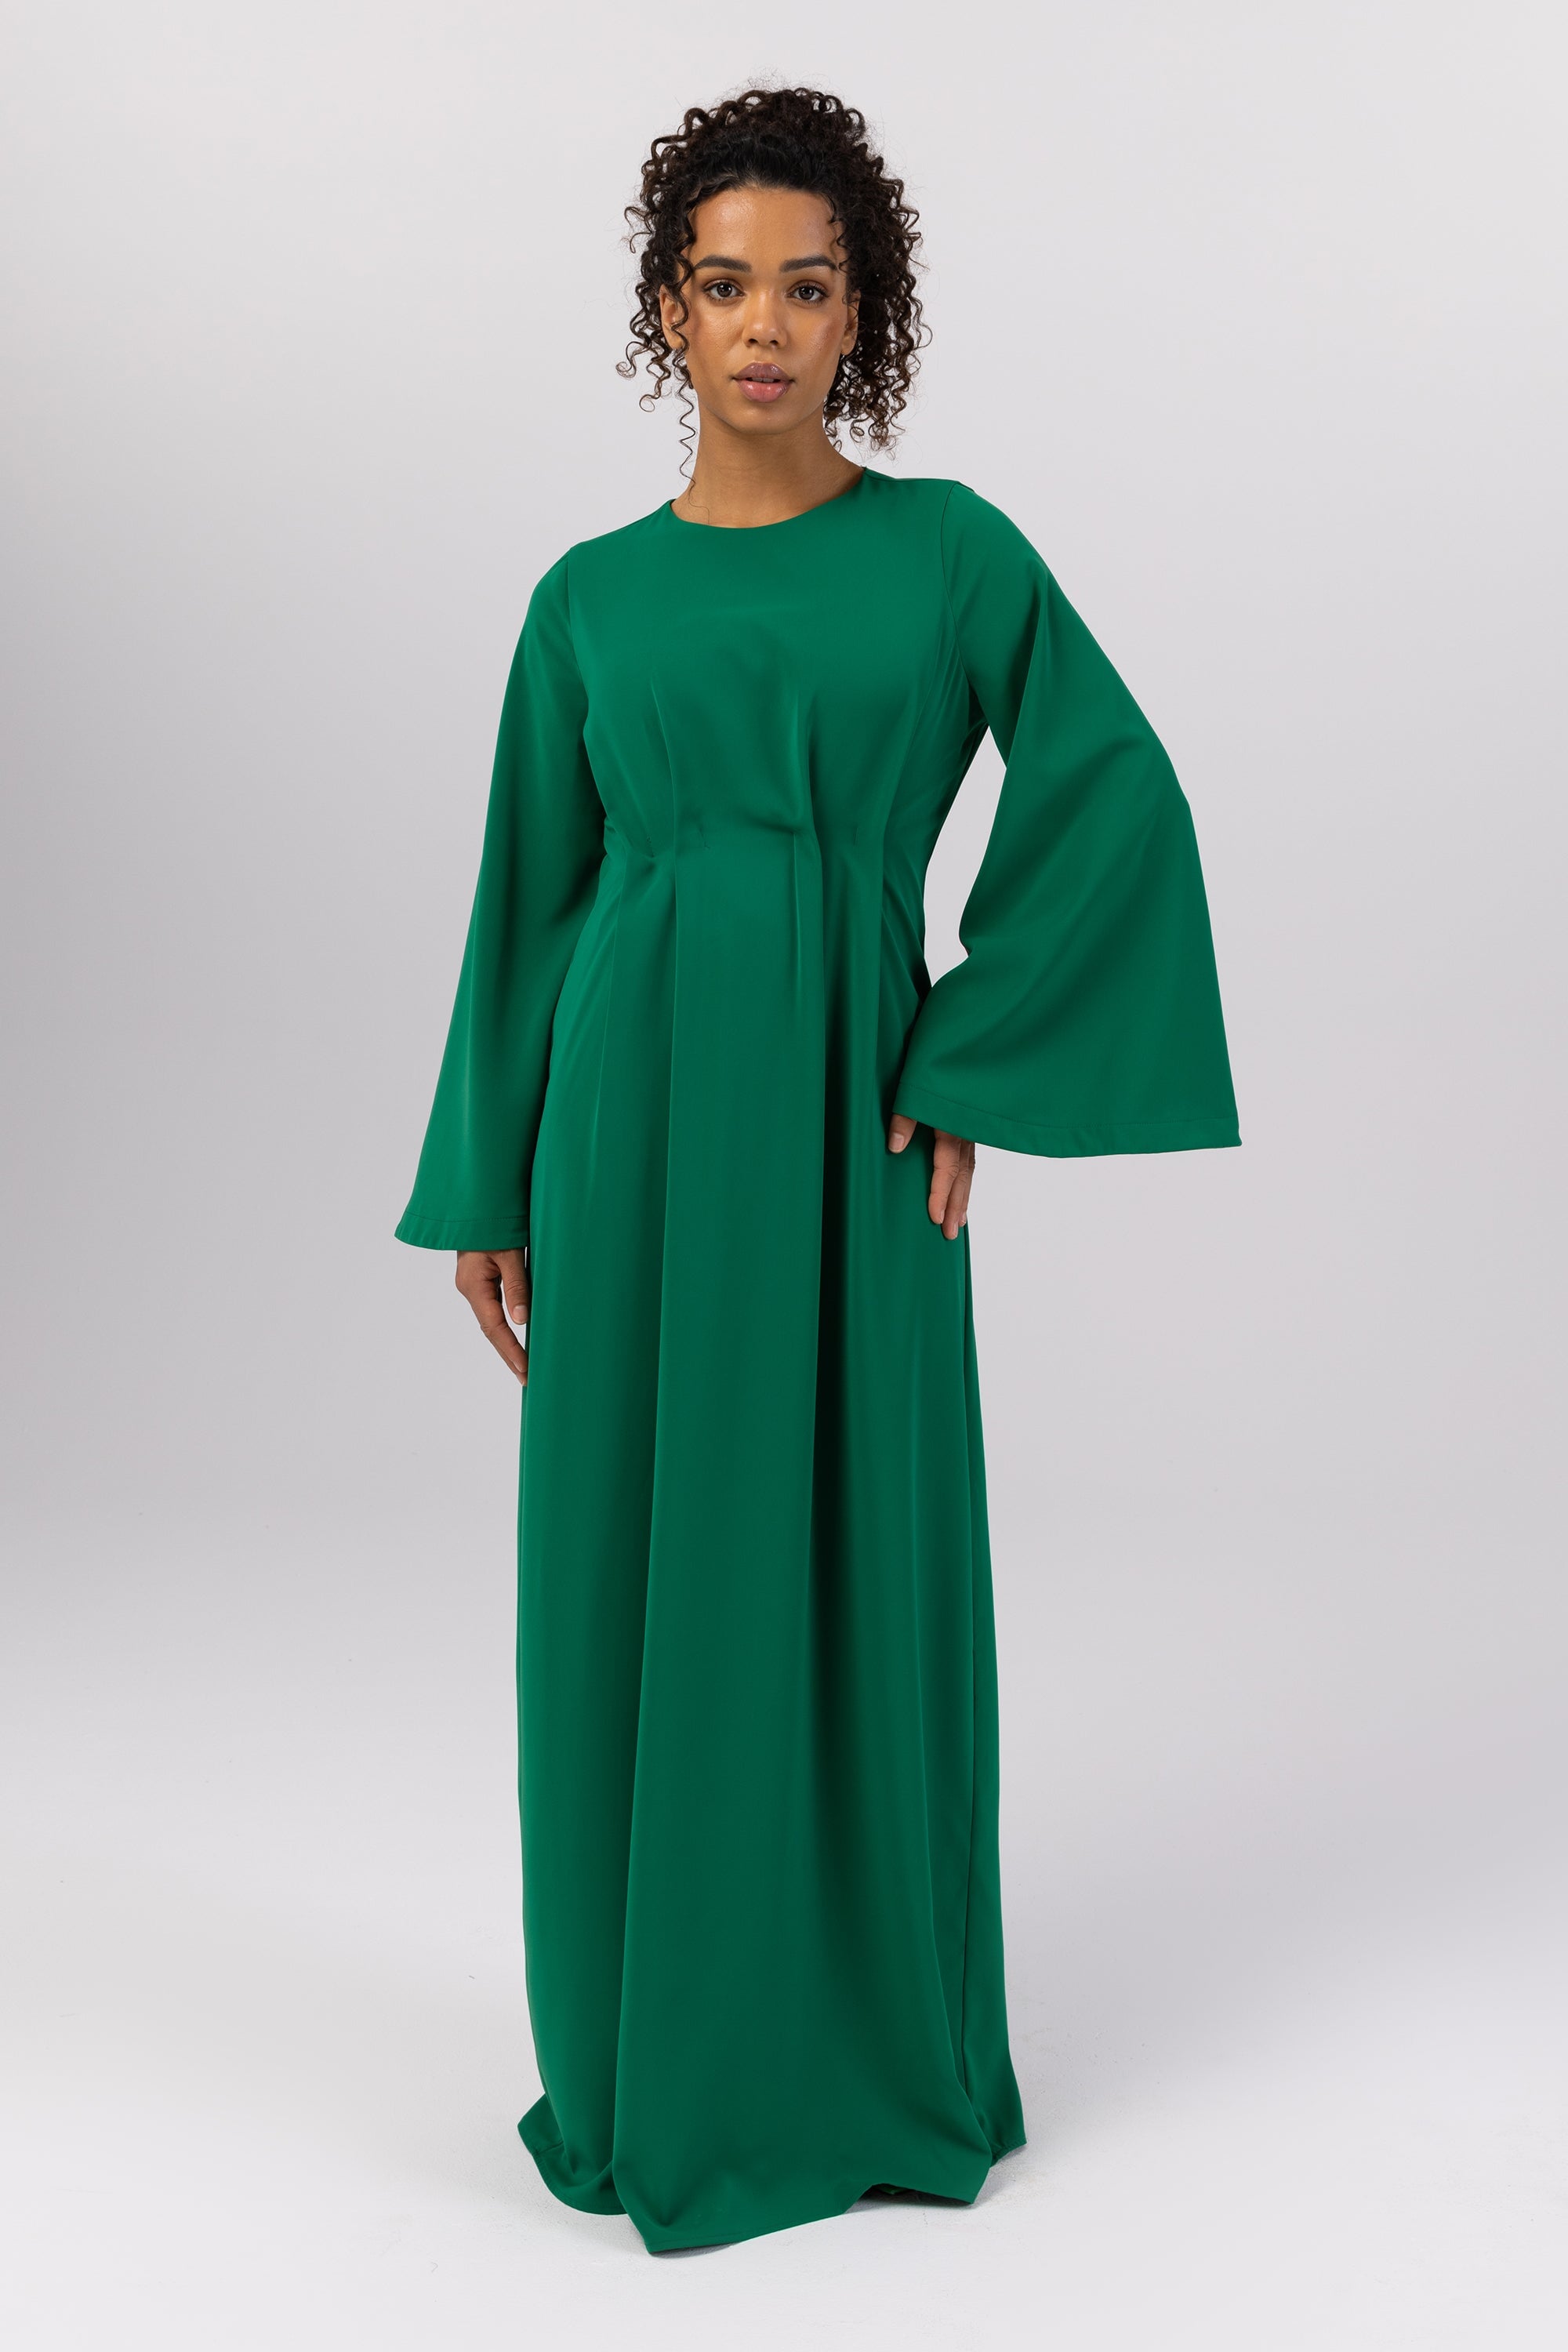 Amani Pleat Maxi Dress - Jade Veiled 